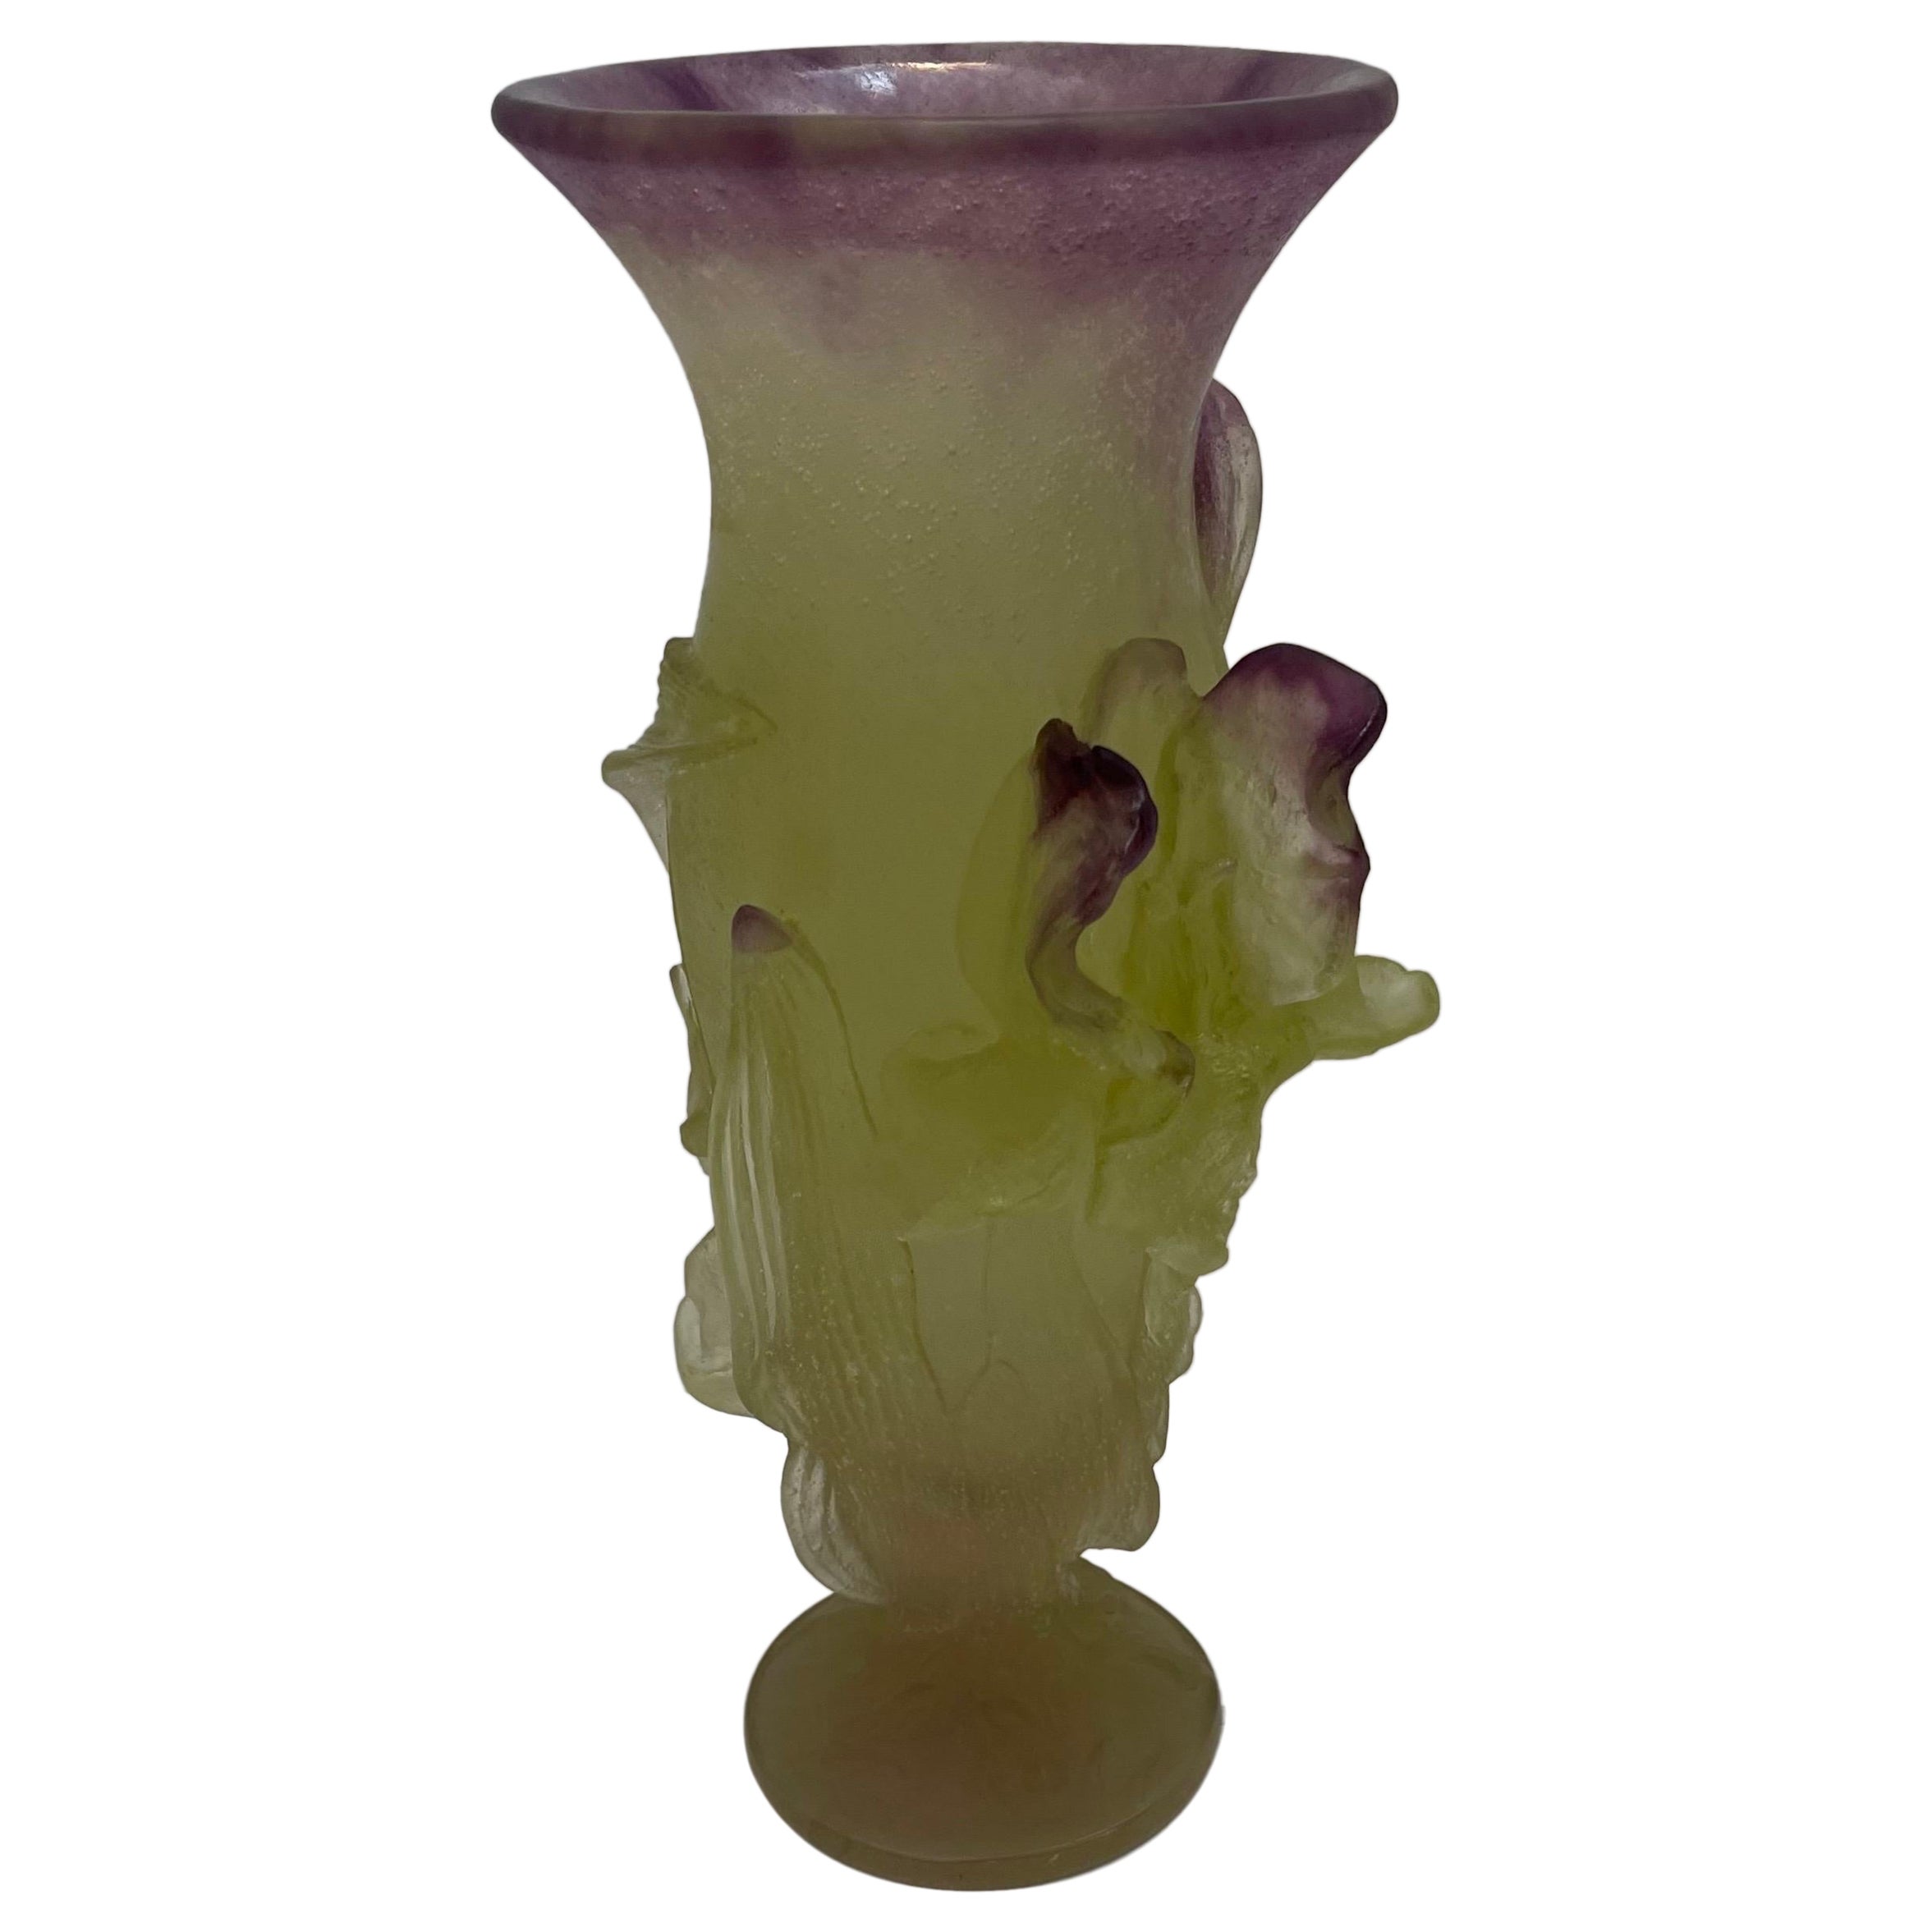  Wonderful Daum France Crystal "Pate De Verre" Large Art Glass Iris Flower Vase